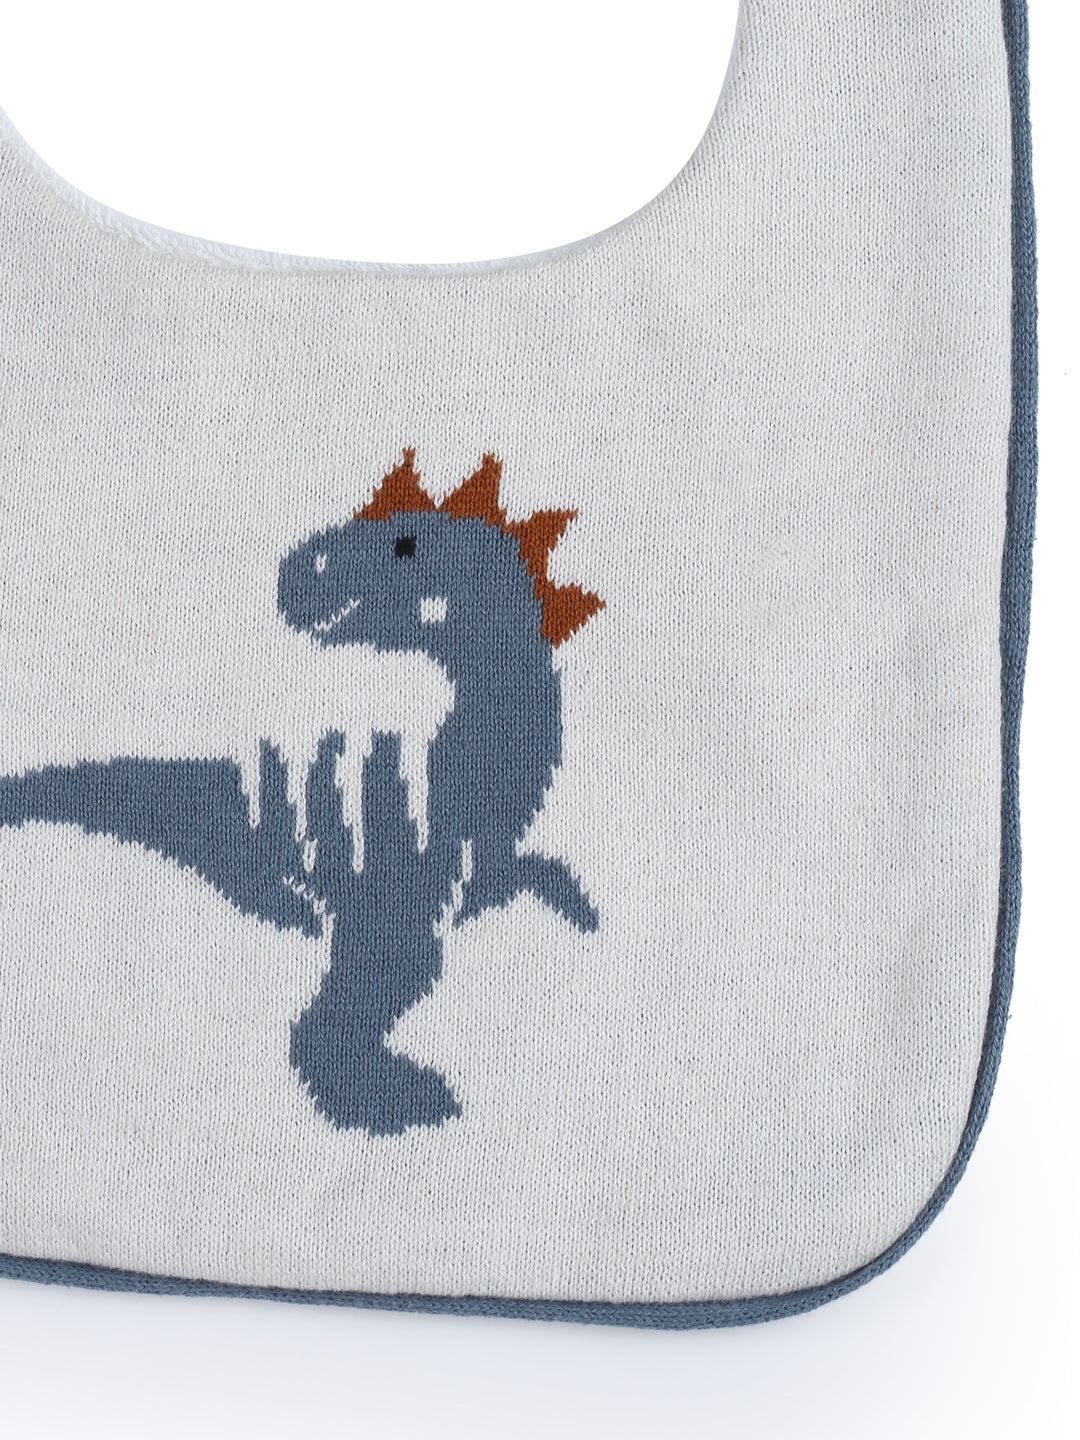 Dinosaur Knitted Bib For Baby